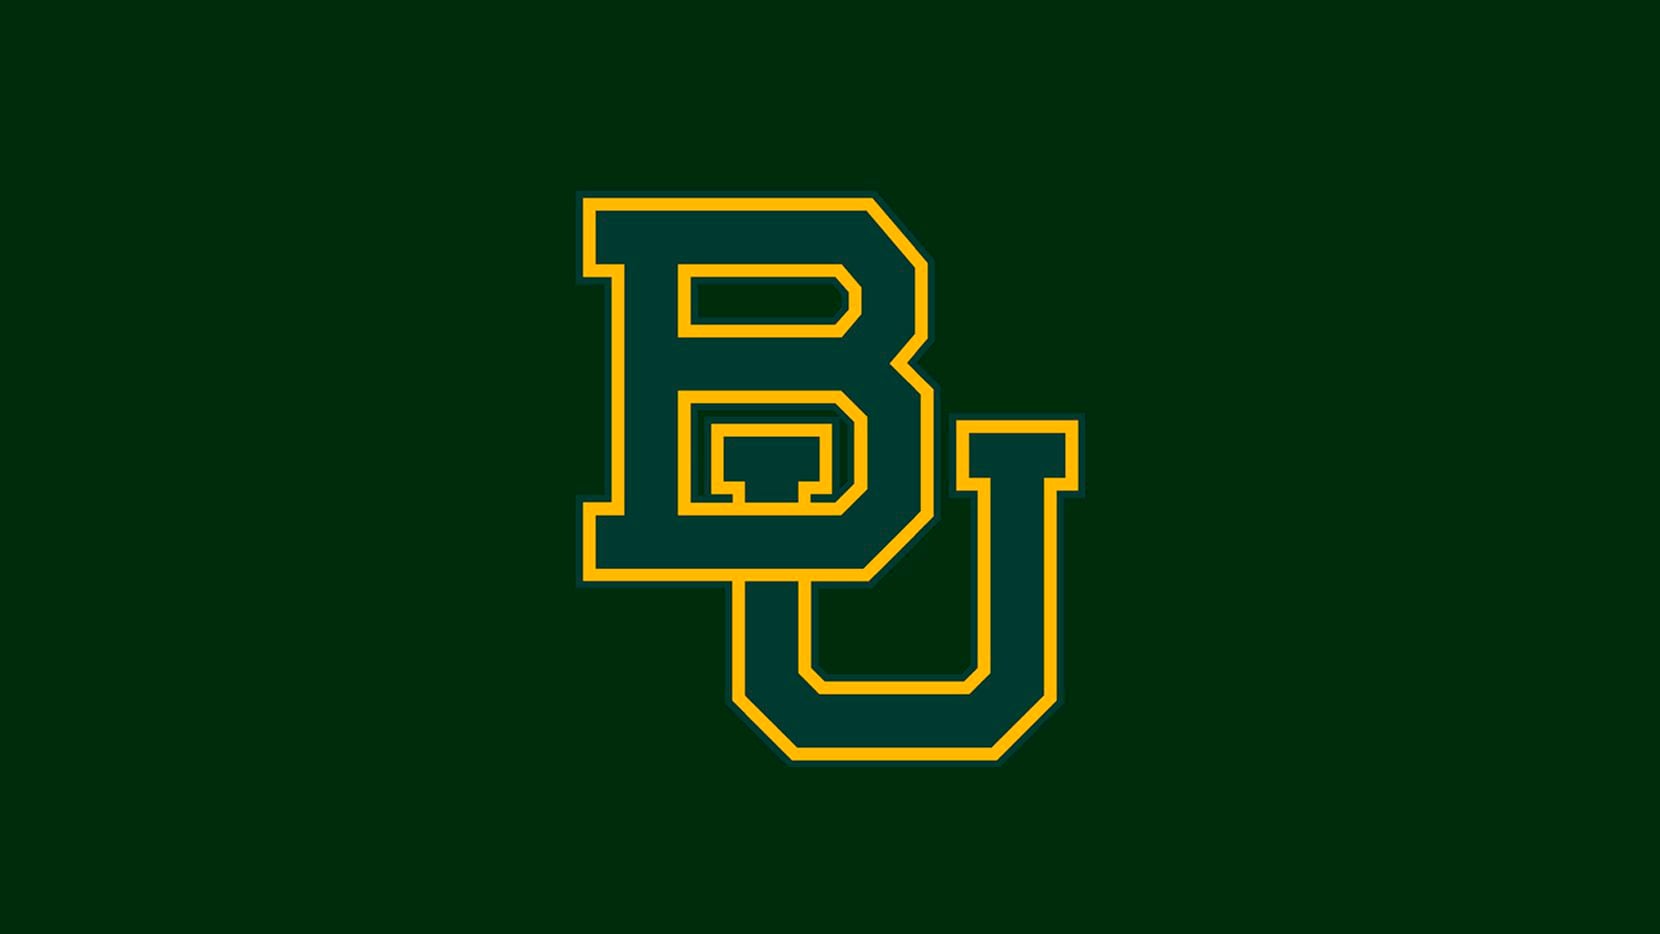 Baylor Bears logo.